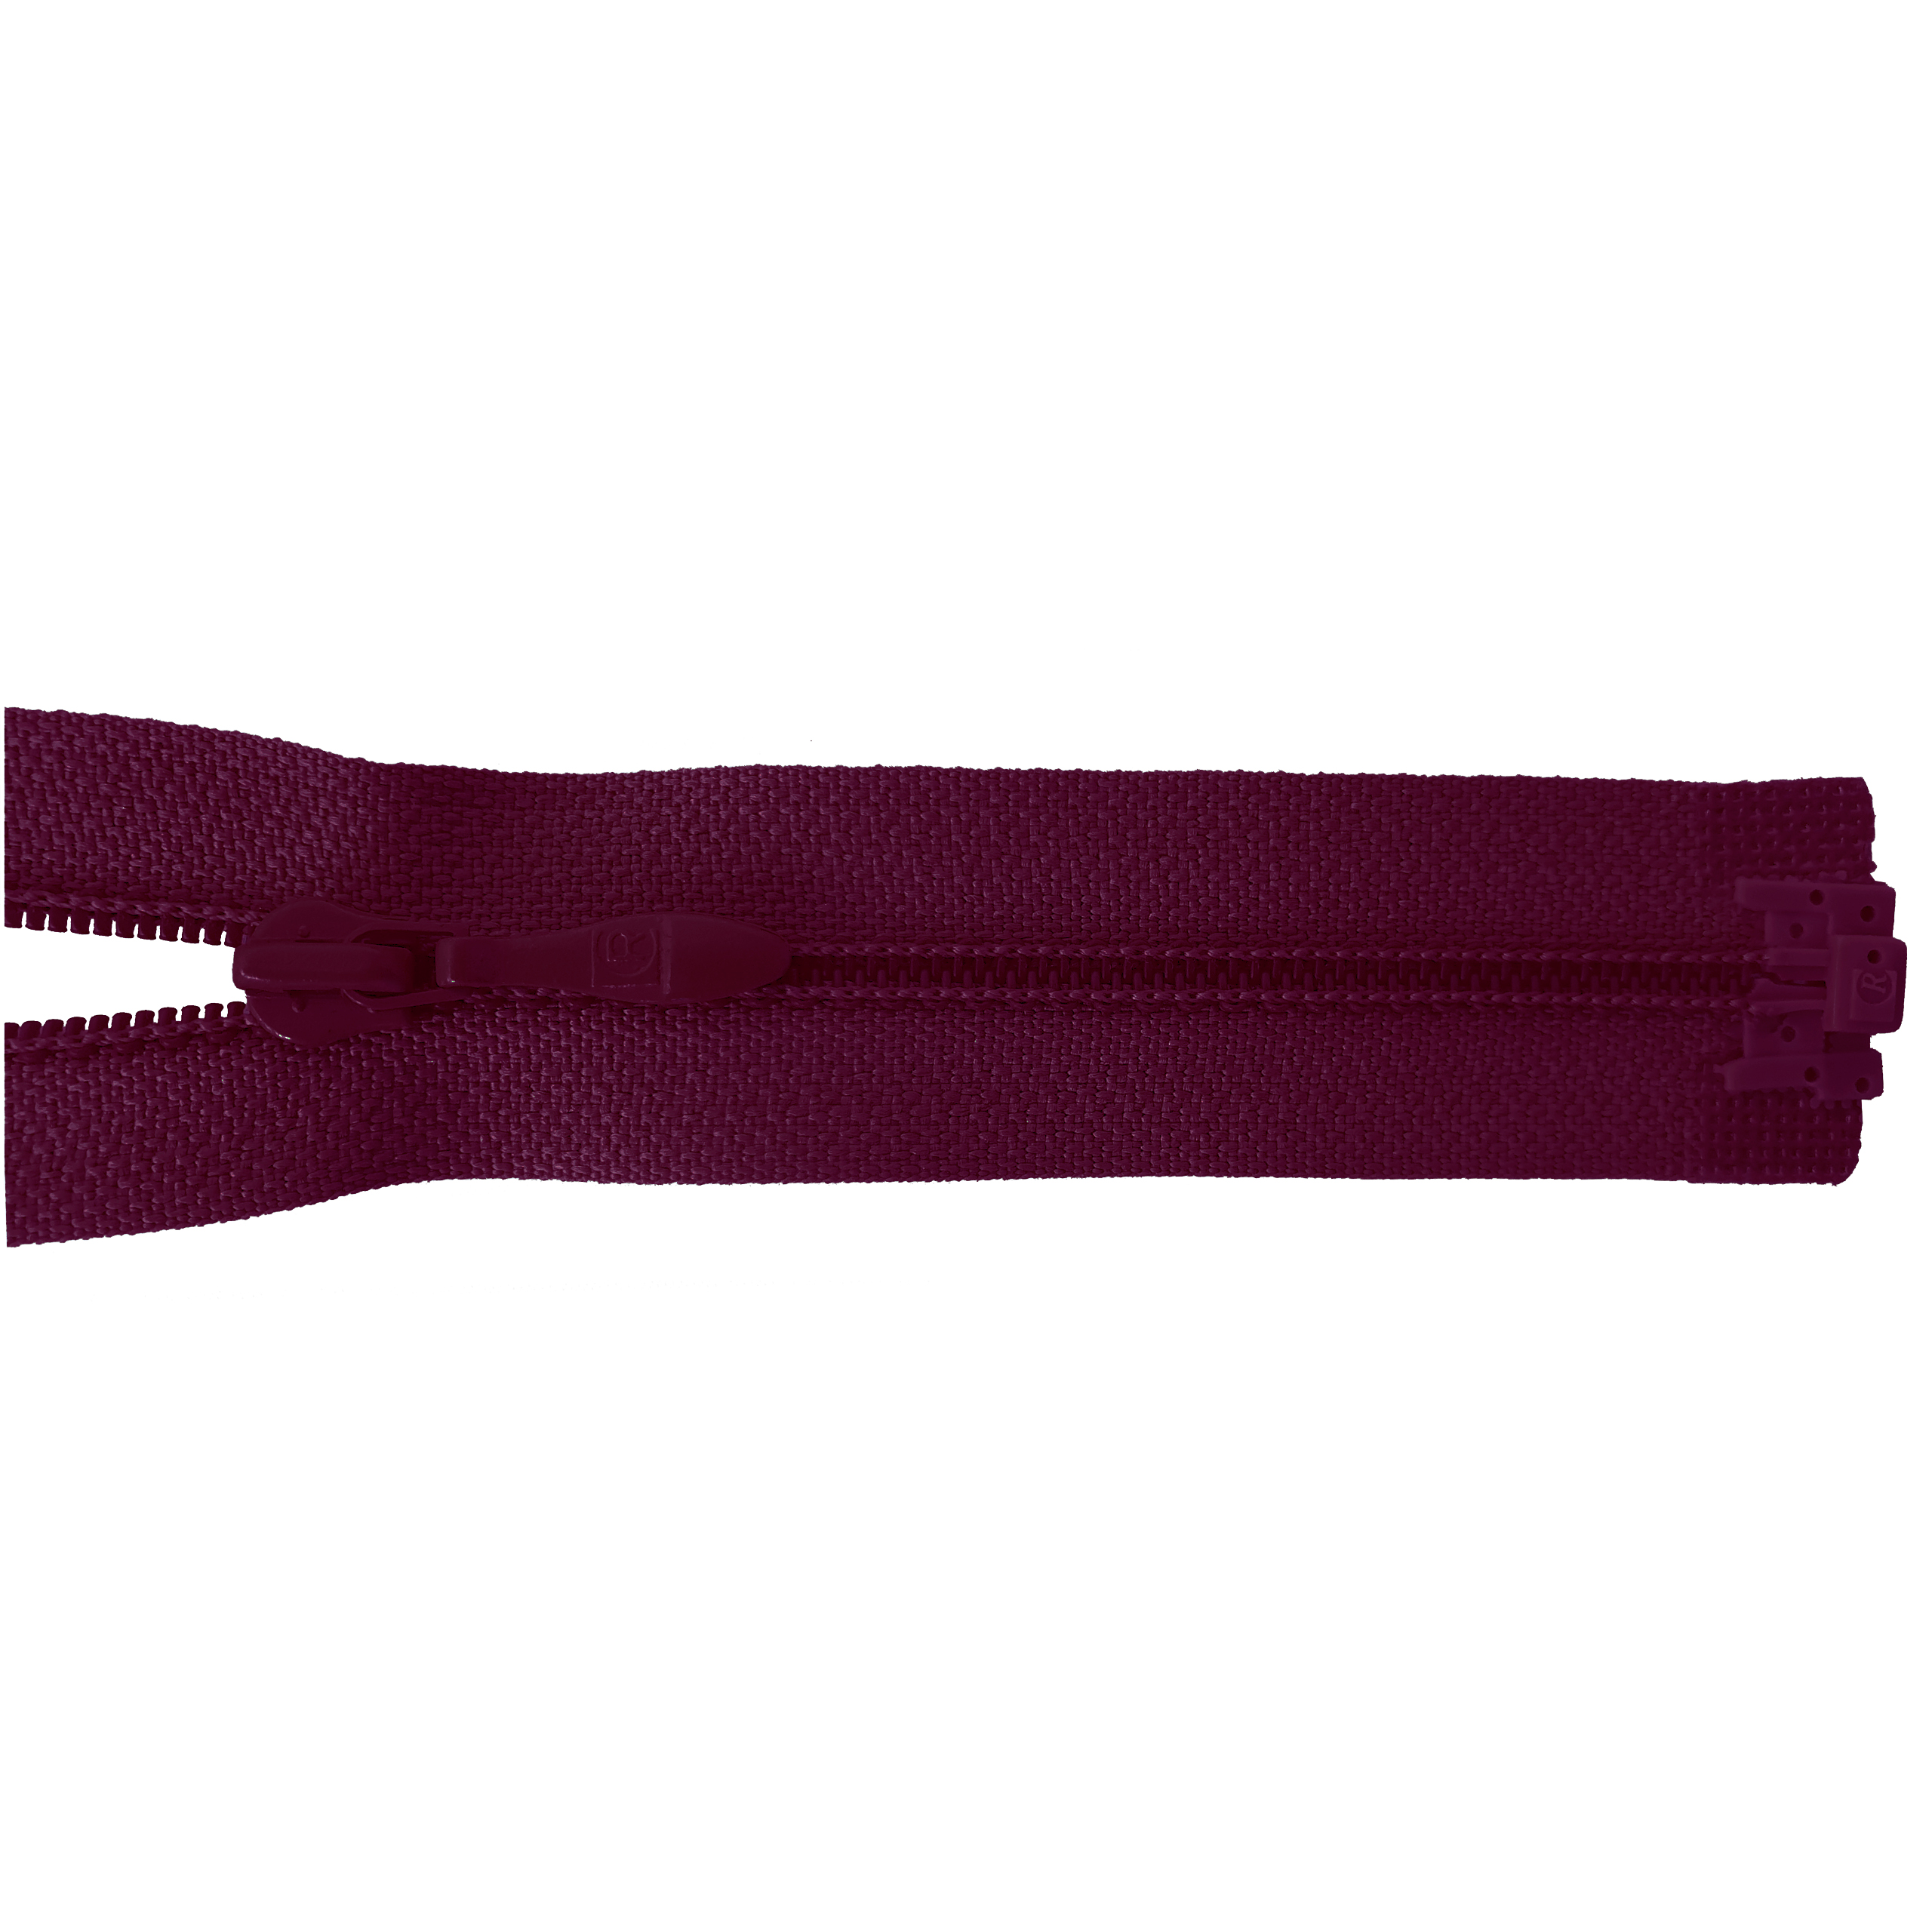 zipper 60cm, -divisible, PES spiral, fein, dark purple brown